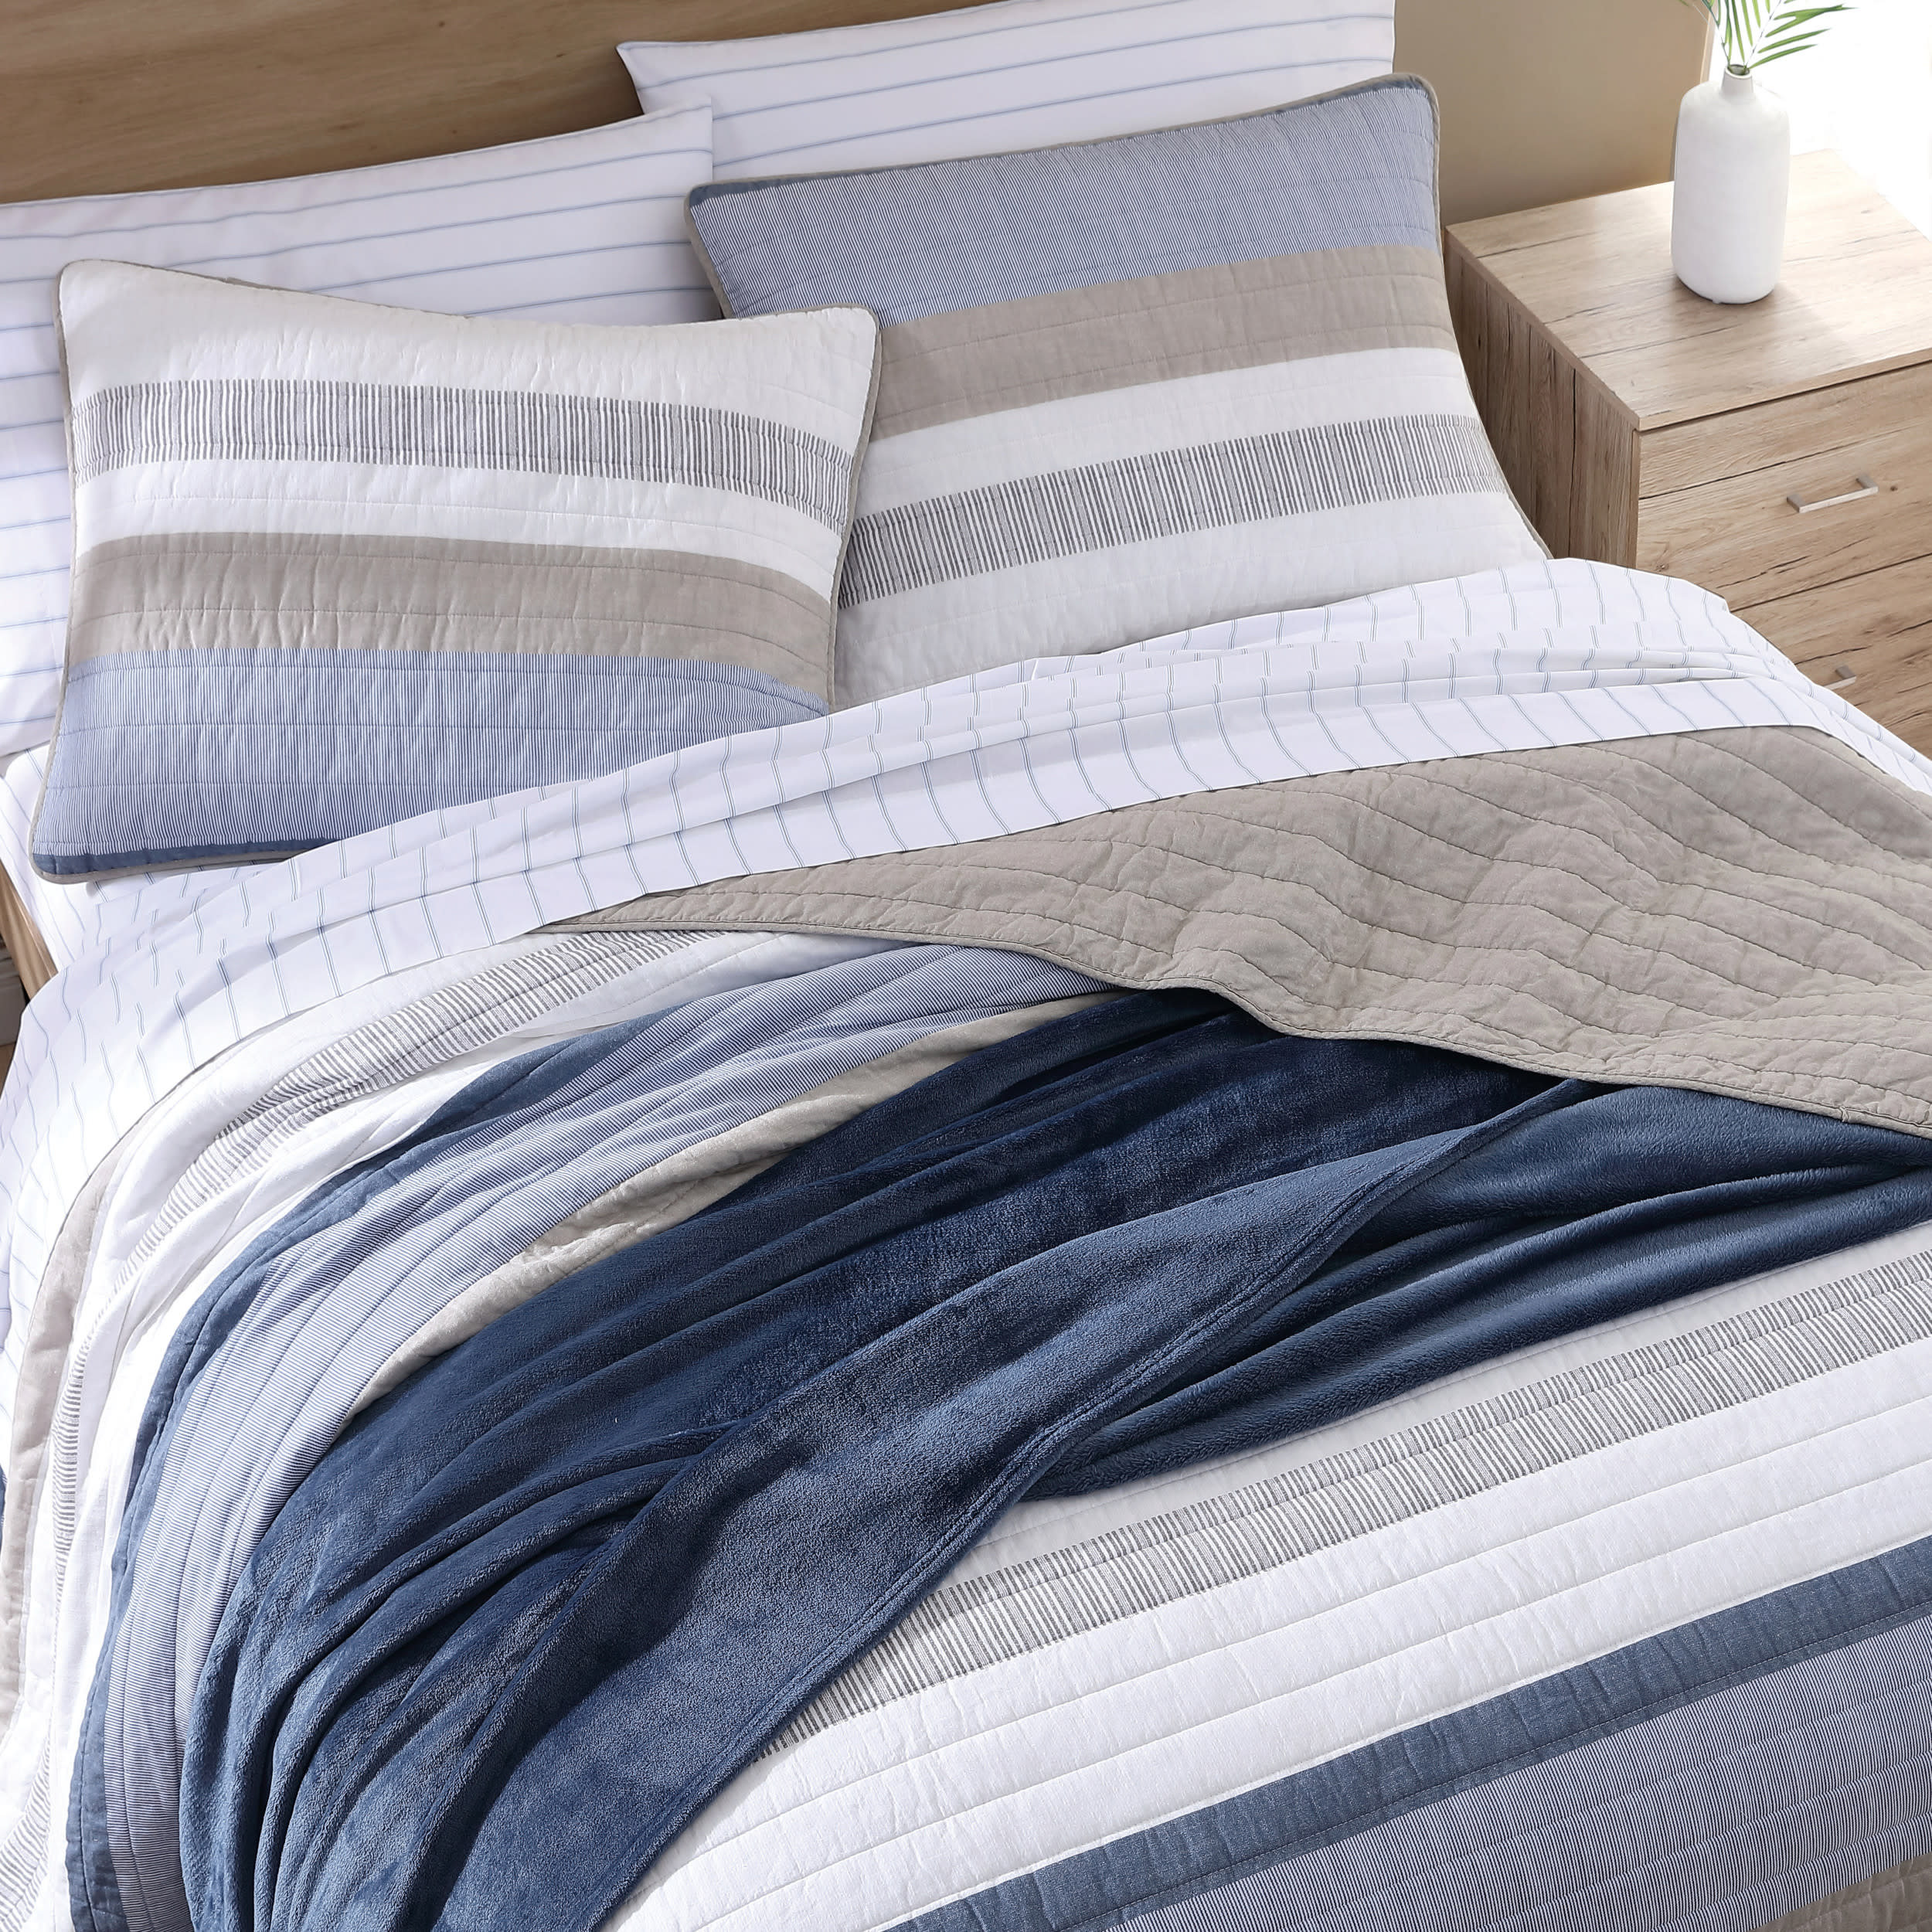 Nautica Fairwater Blue Cotton Reversible Comforter Set - On Sale